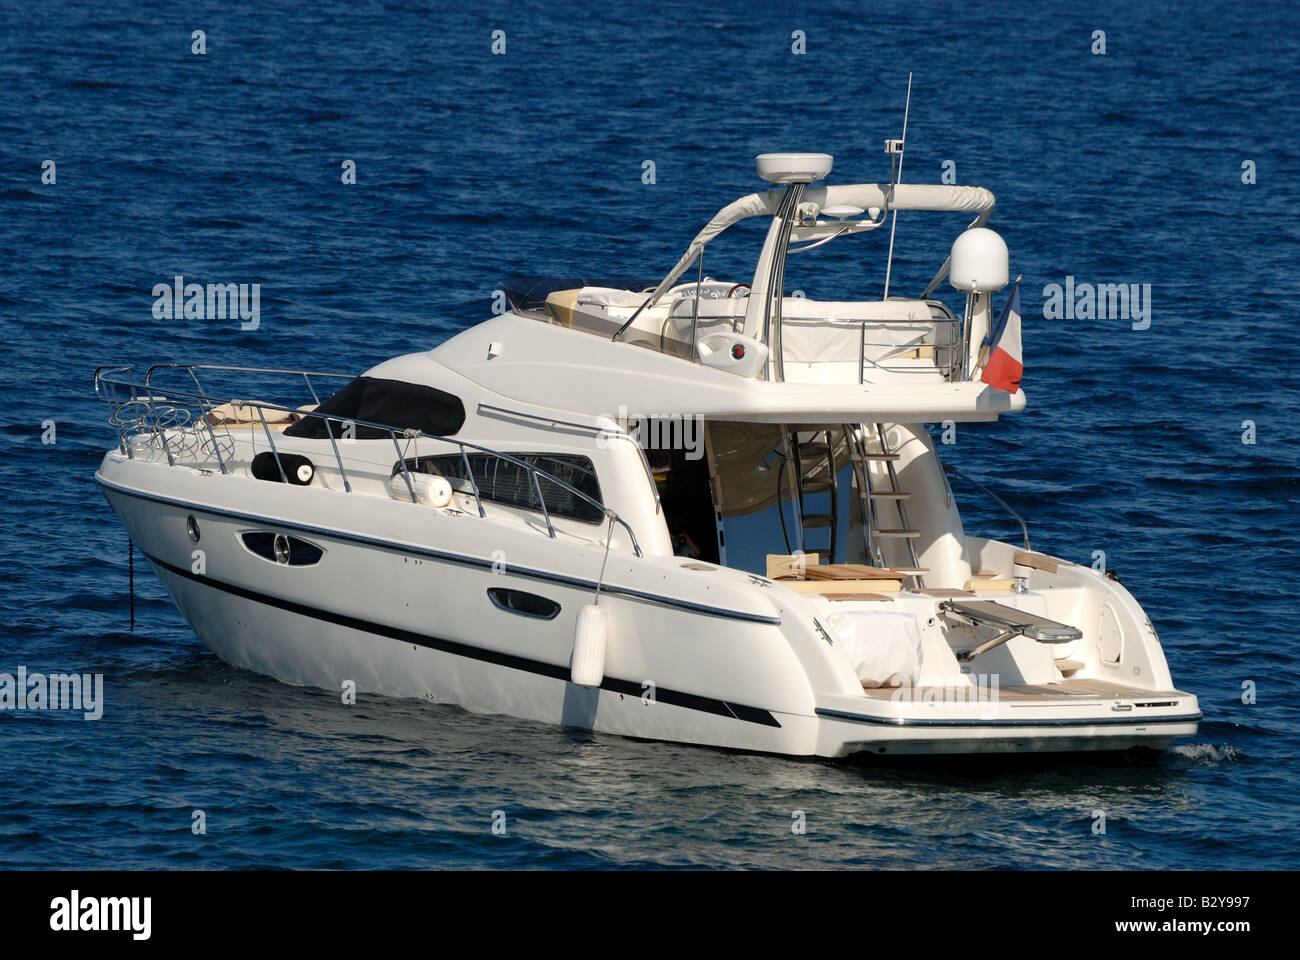 Small luxury Motor Yacht in the Mediterranean Sea Stock Photo